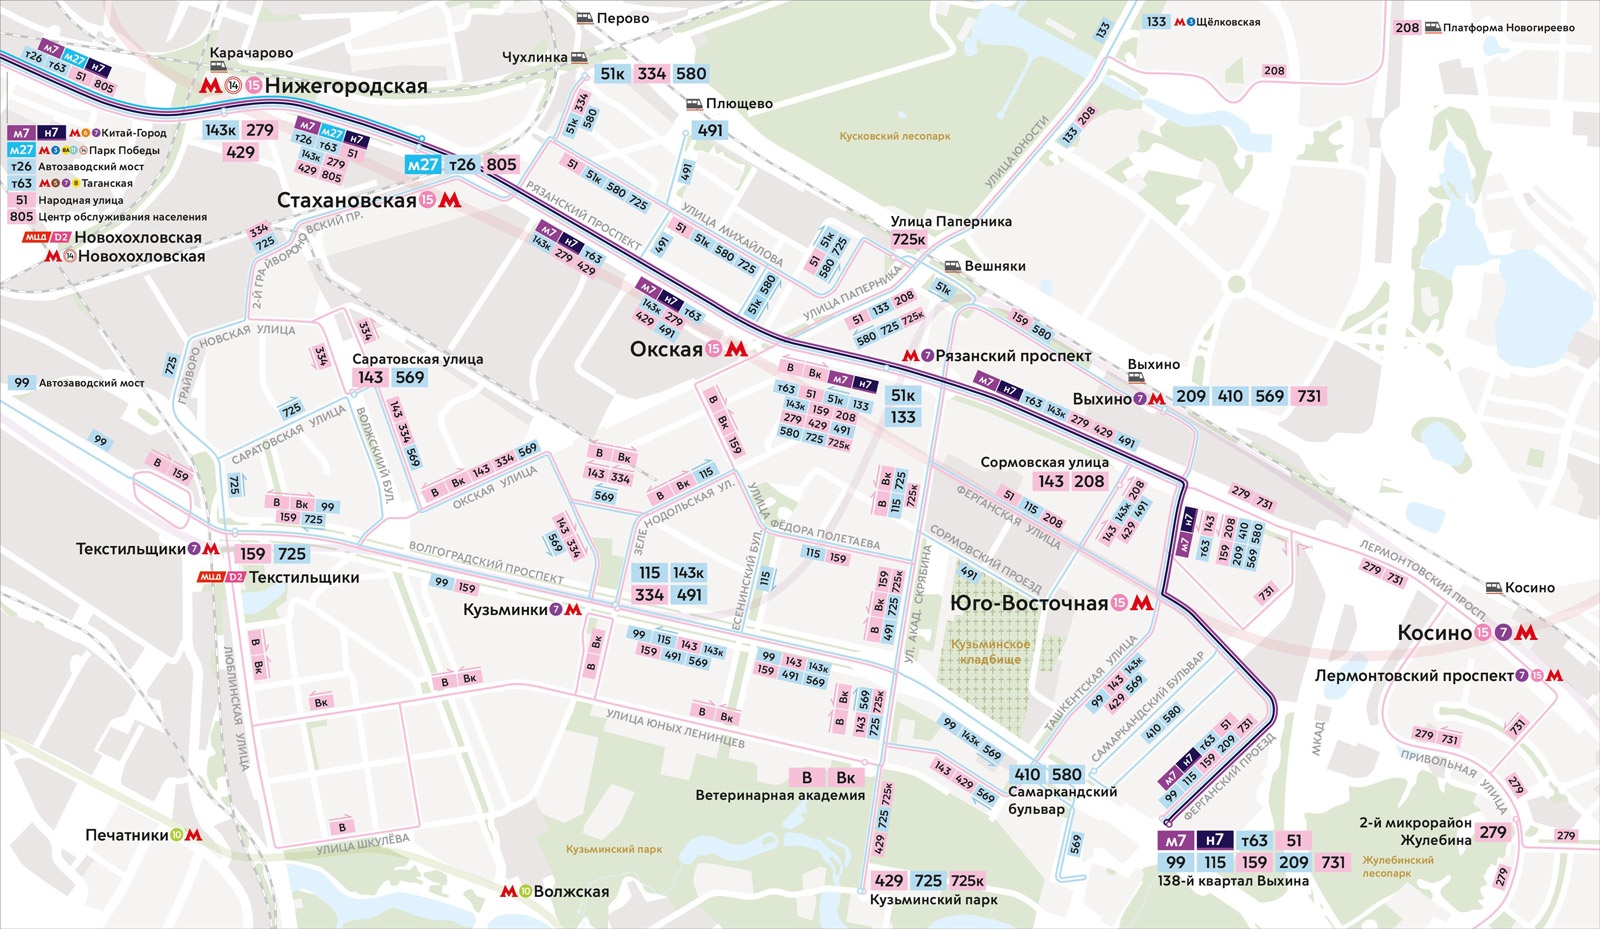 Карта автобуса люберцы. Карта маршрута автобуса. Автобусные остановки на карте. Автобусные маршруты Москвы на карте. Выхино на карте.